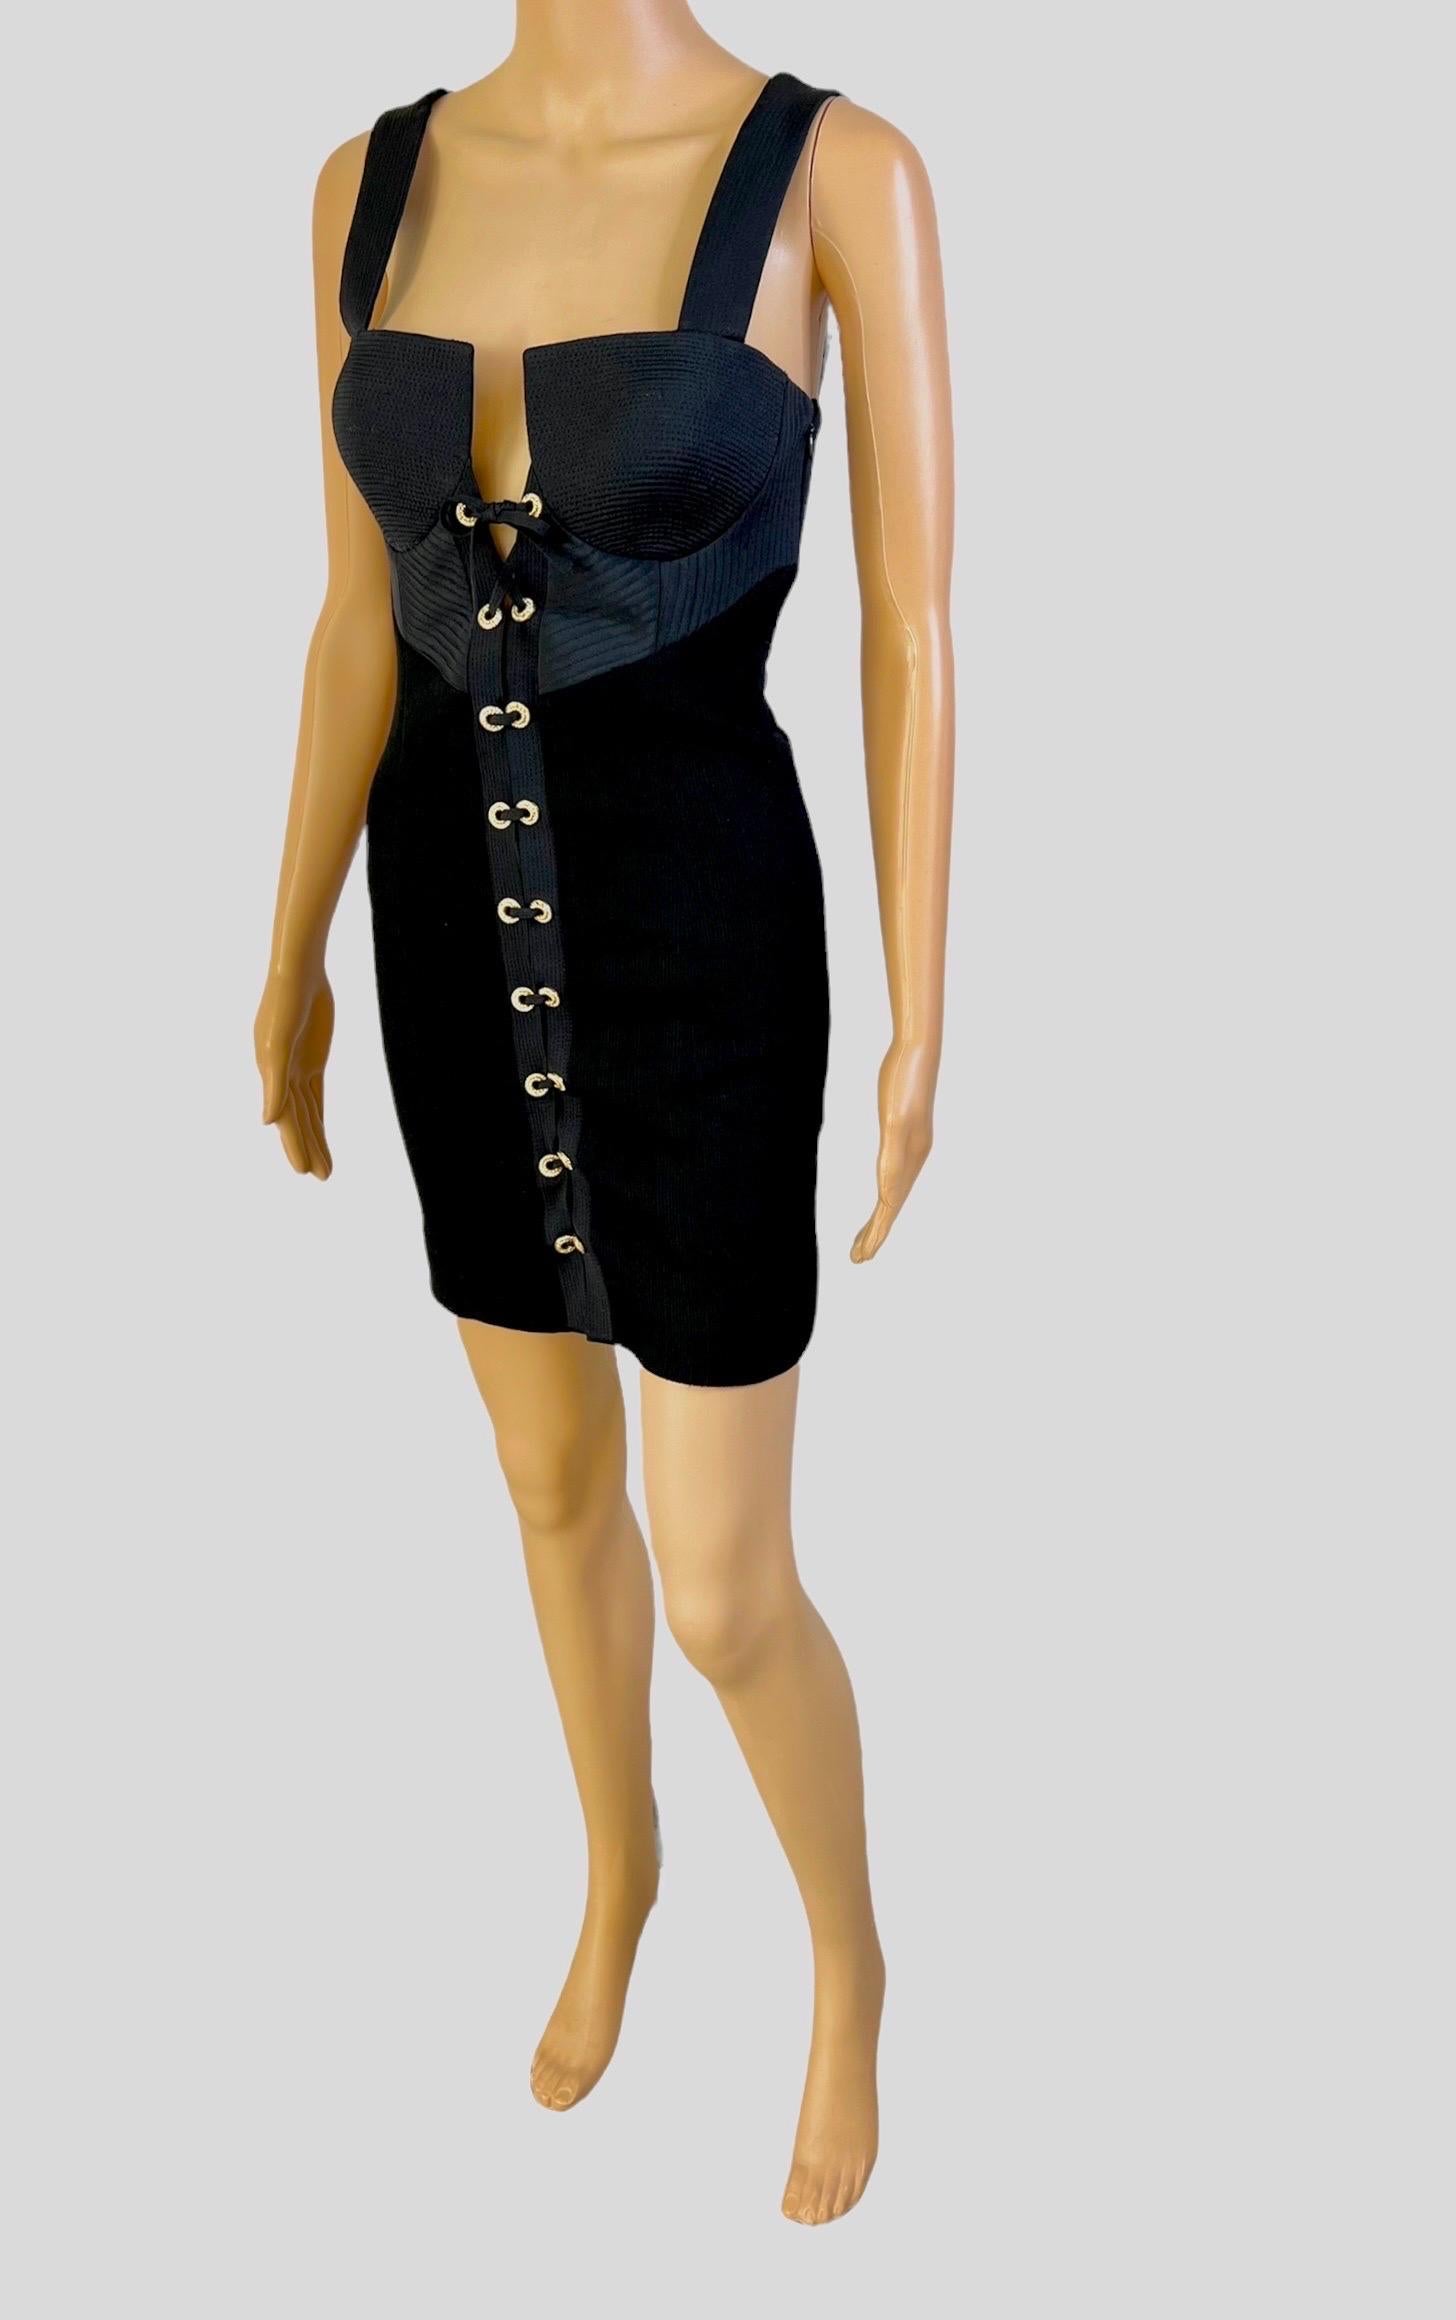 Women's or Men's Gianni Versace S/S 1992 Couture Bustier Corset Lace Up Black Mini Dress For Sale